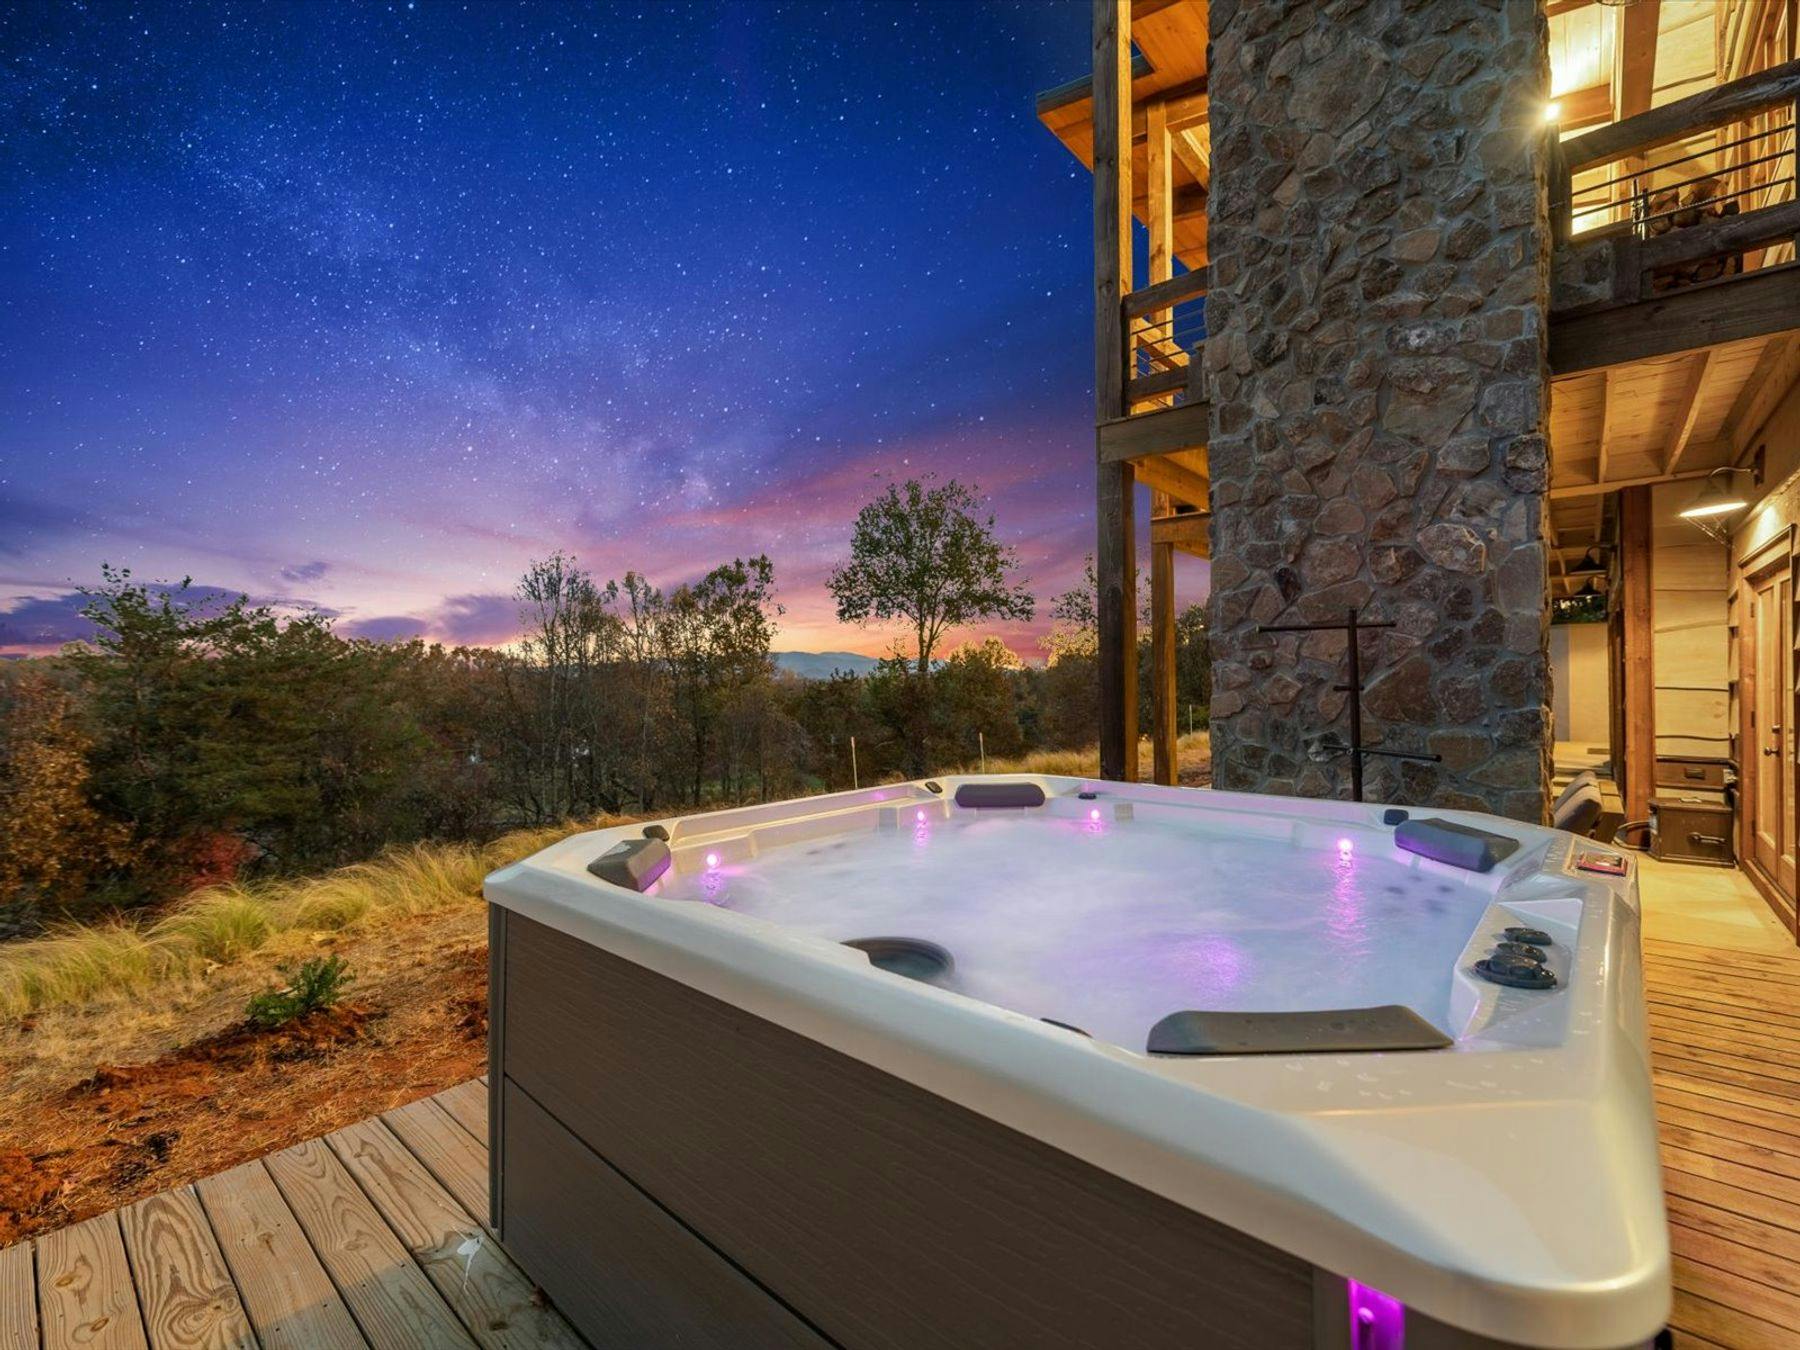 Hot tub night sky in Blue Ridge